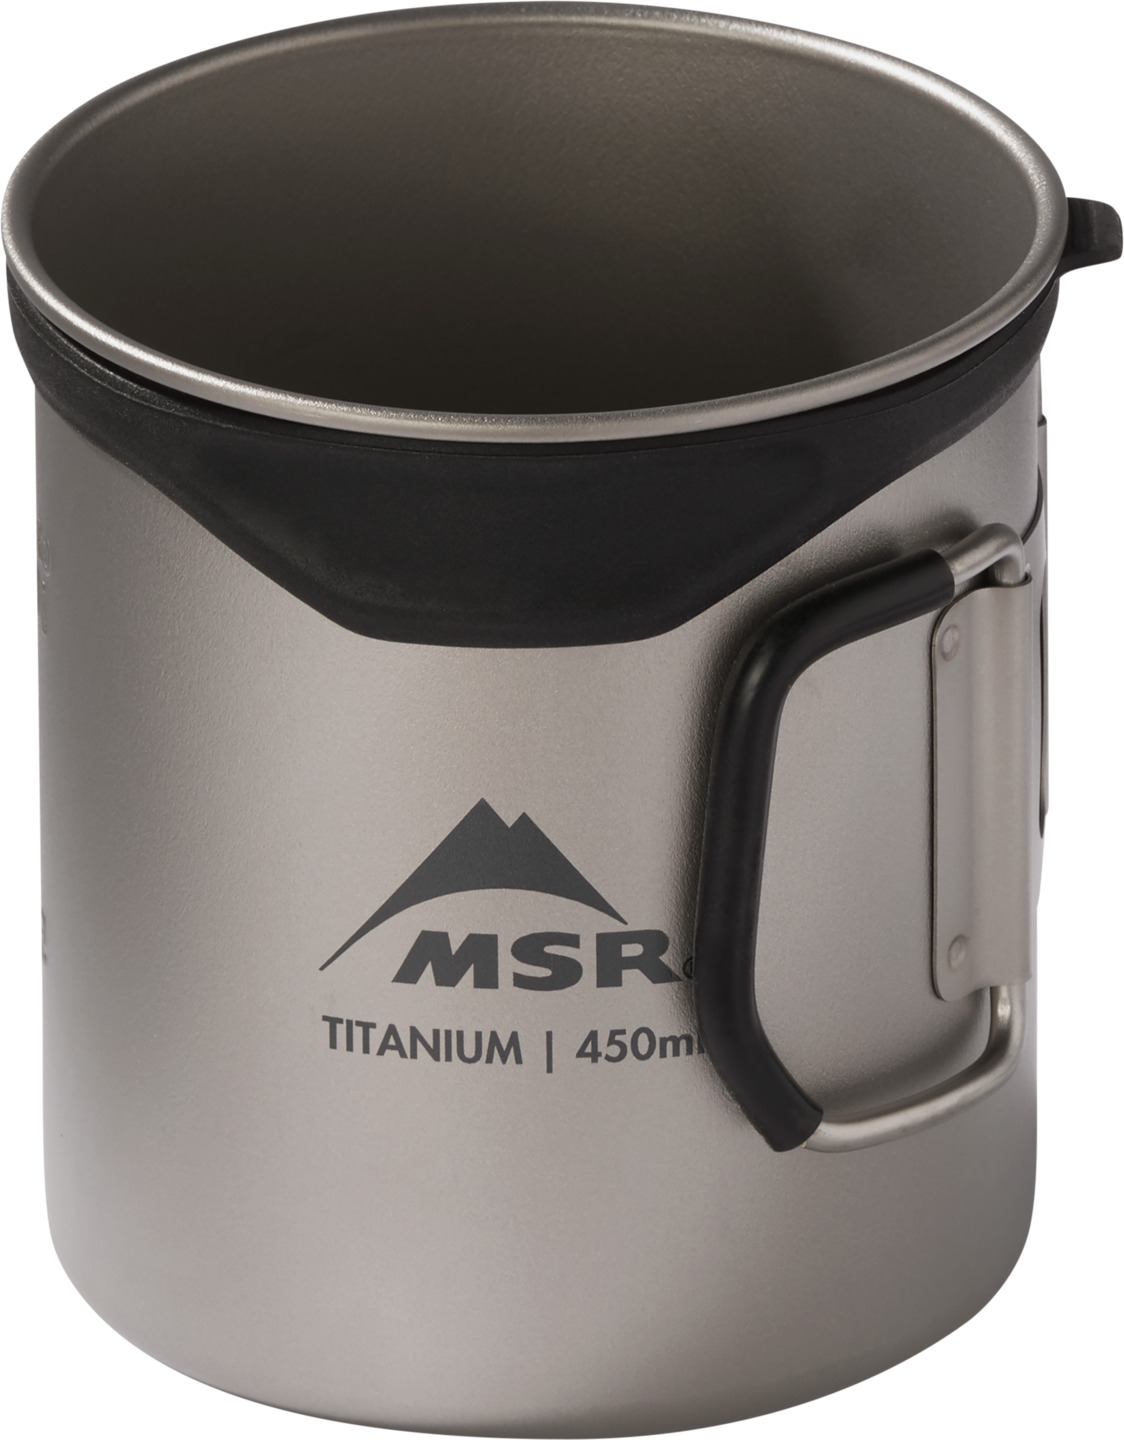 MSR TITAN CUP hrneček 450ml